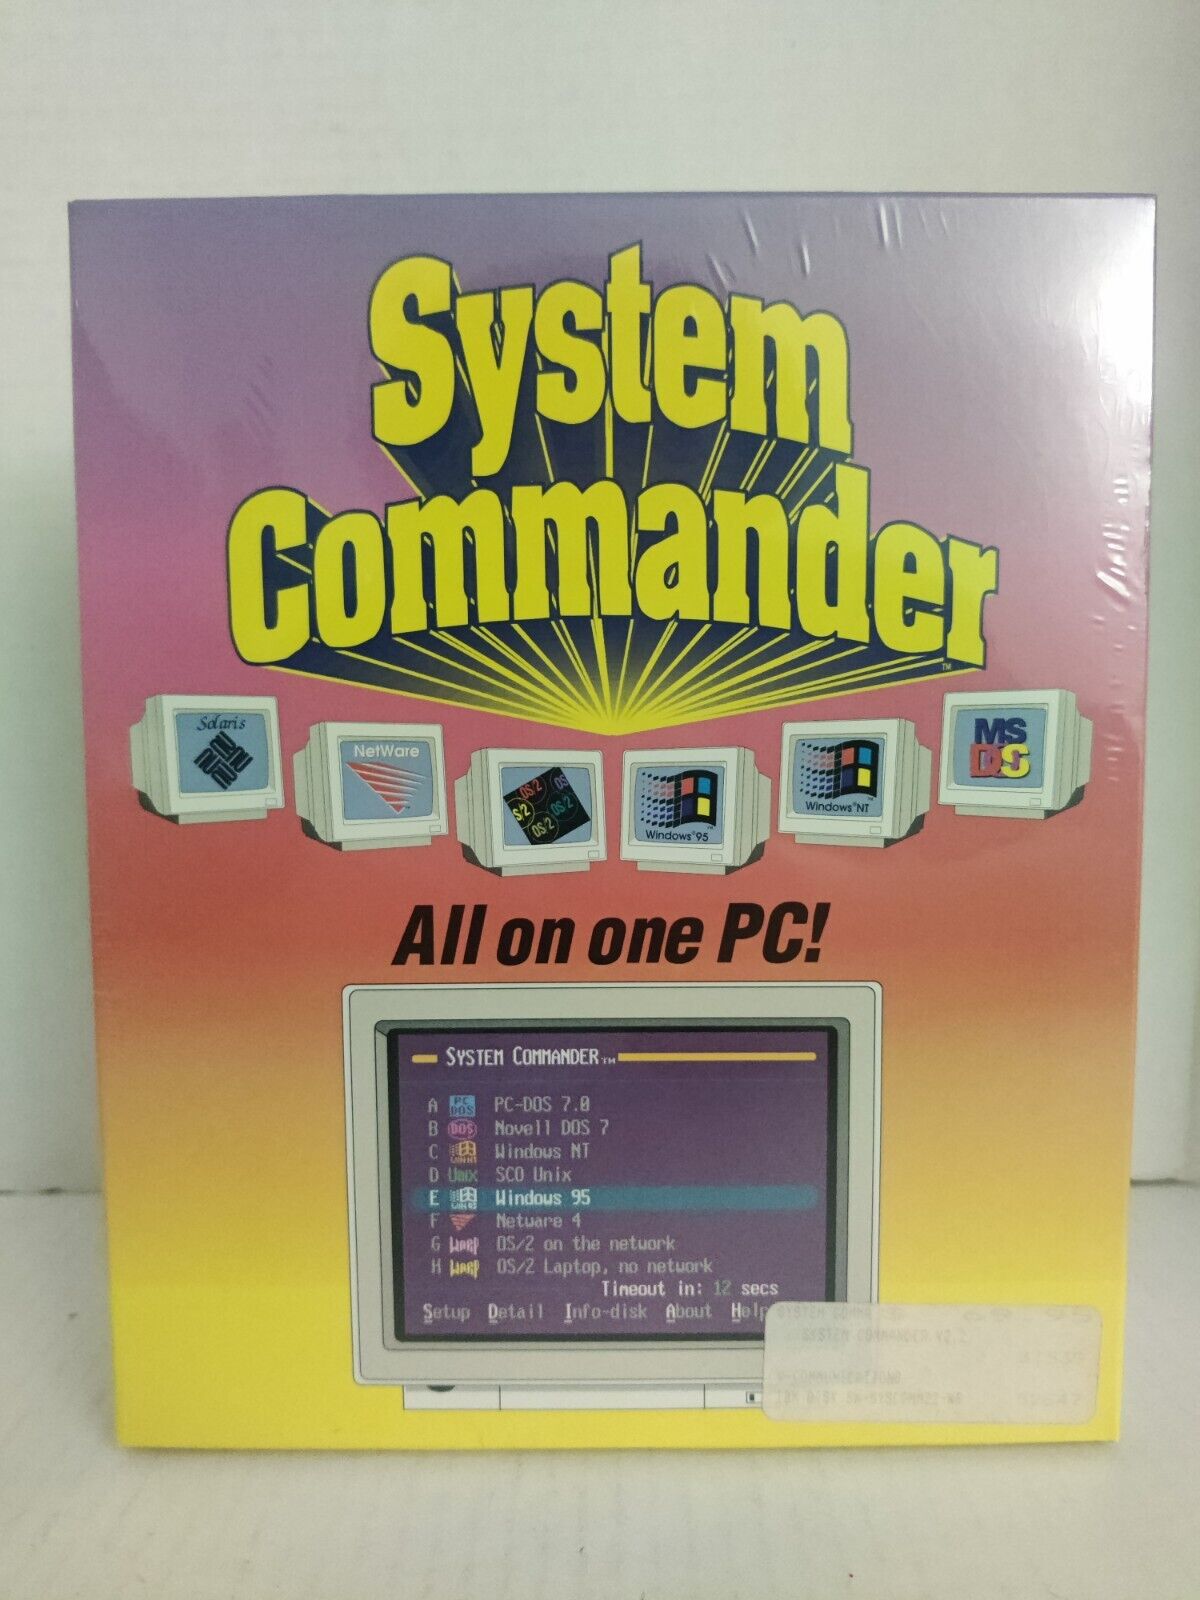 System Commander 1995 Version 2.2 PC Software 3.5 Floppy Diskette - New & Sealed